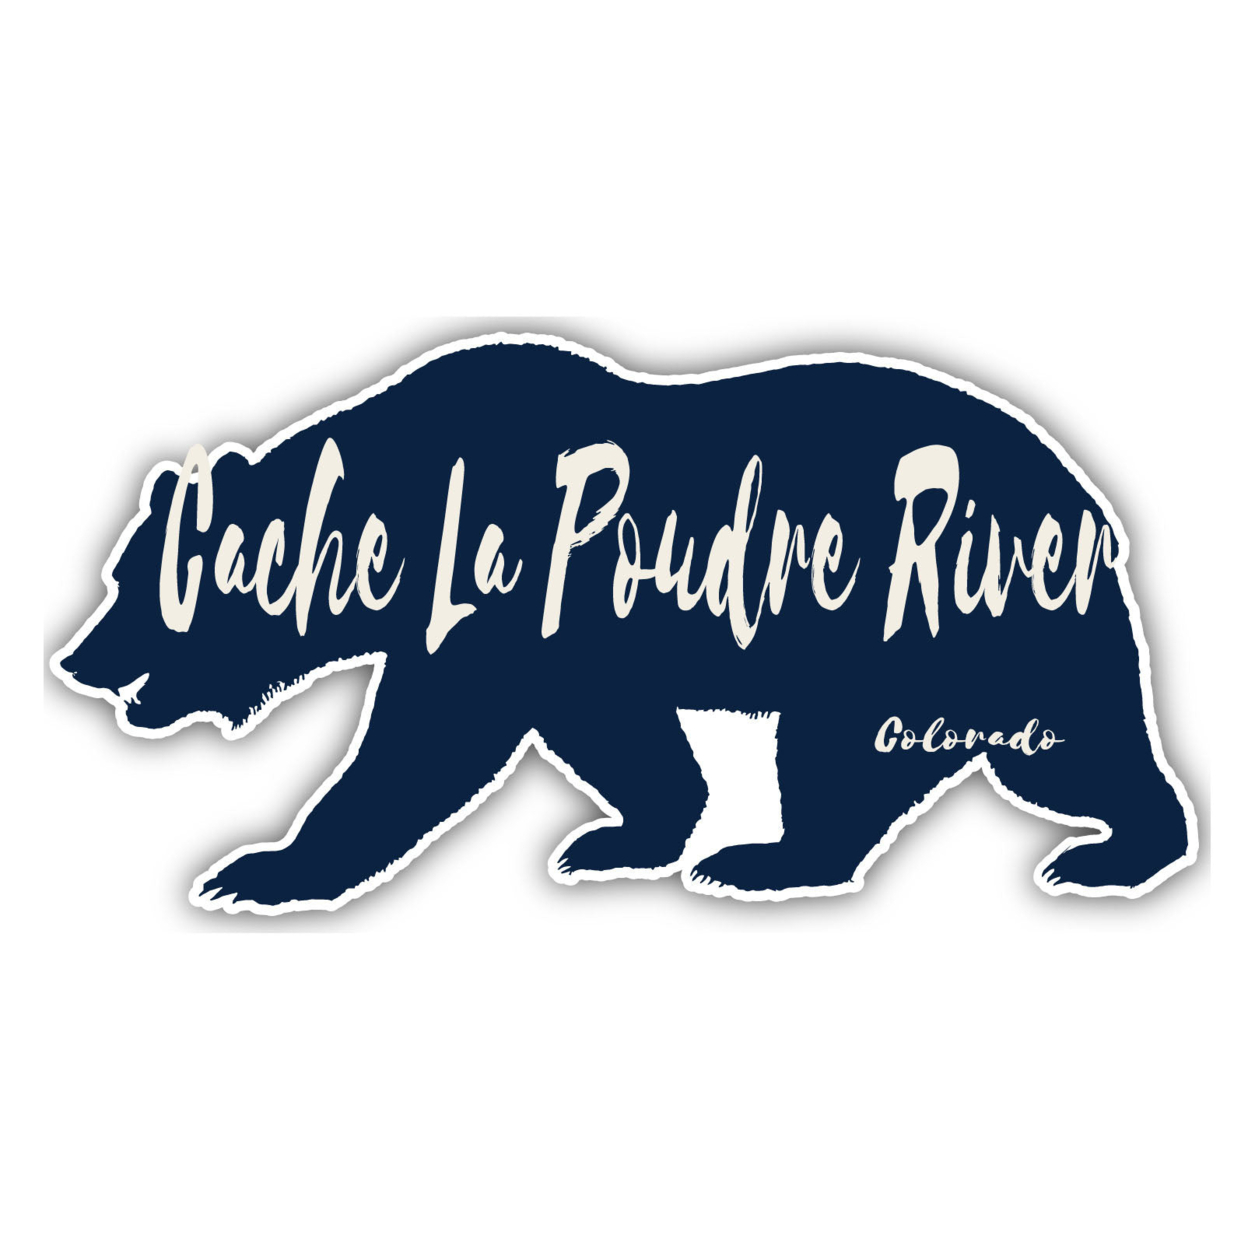 Cache La Poudre River Colorado Souvenir Decorative Stickers (Choose Theme And Size) - Single Unit, 12-Inch, Bear